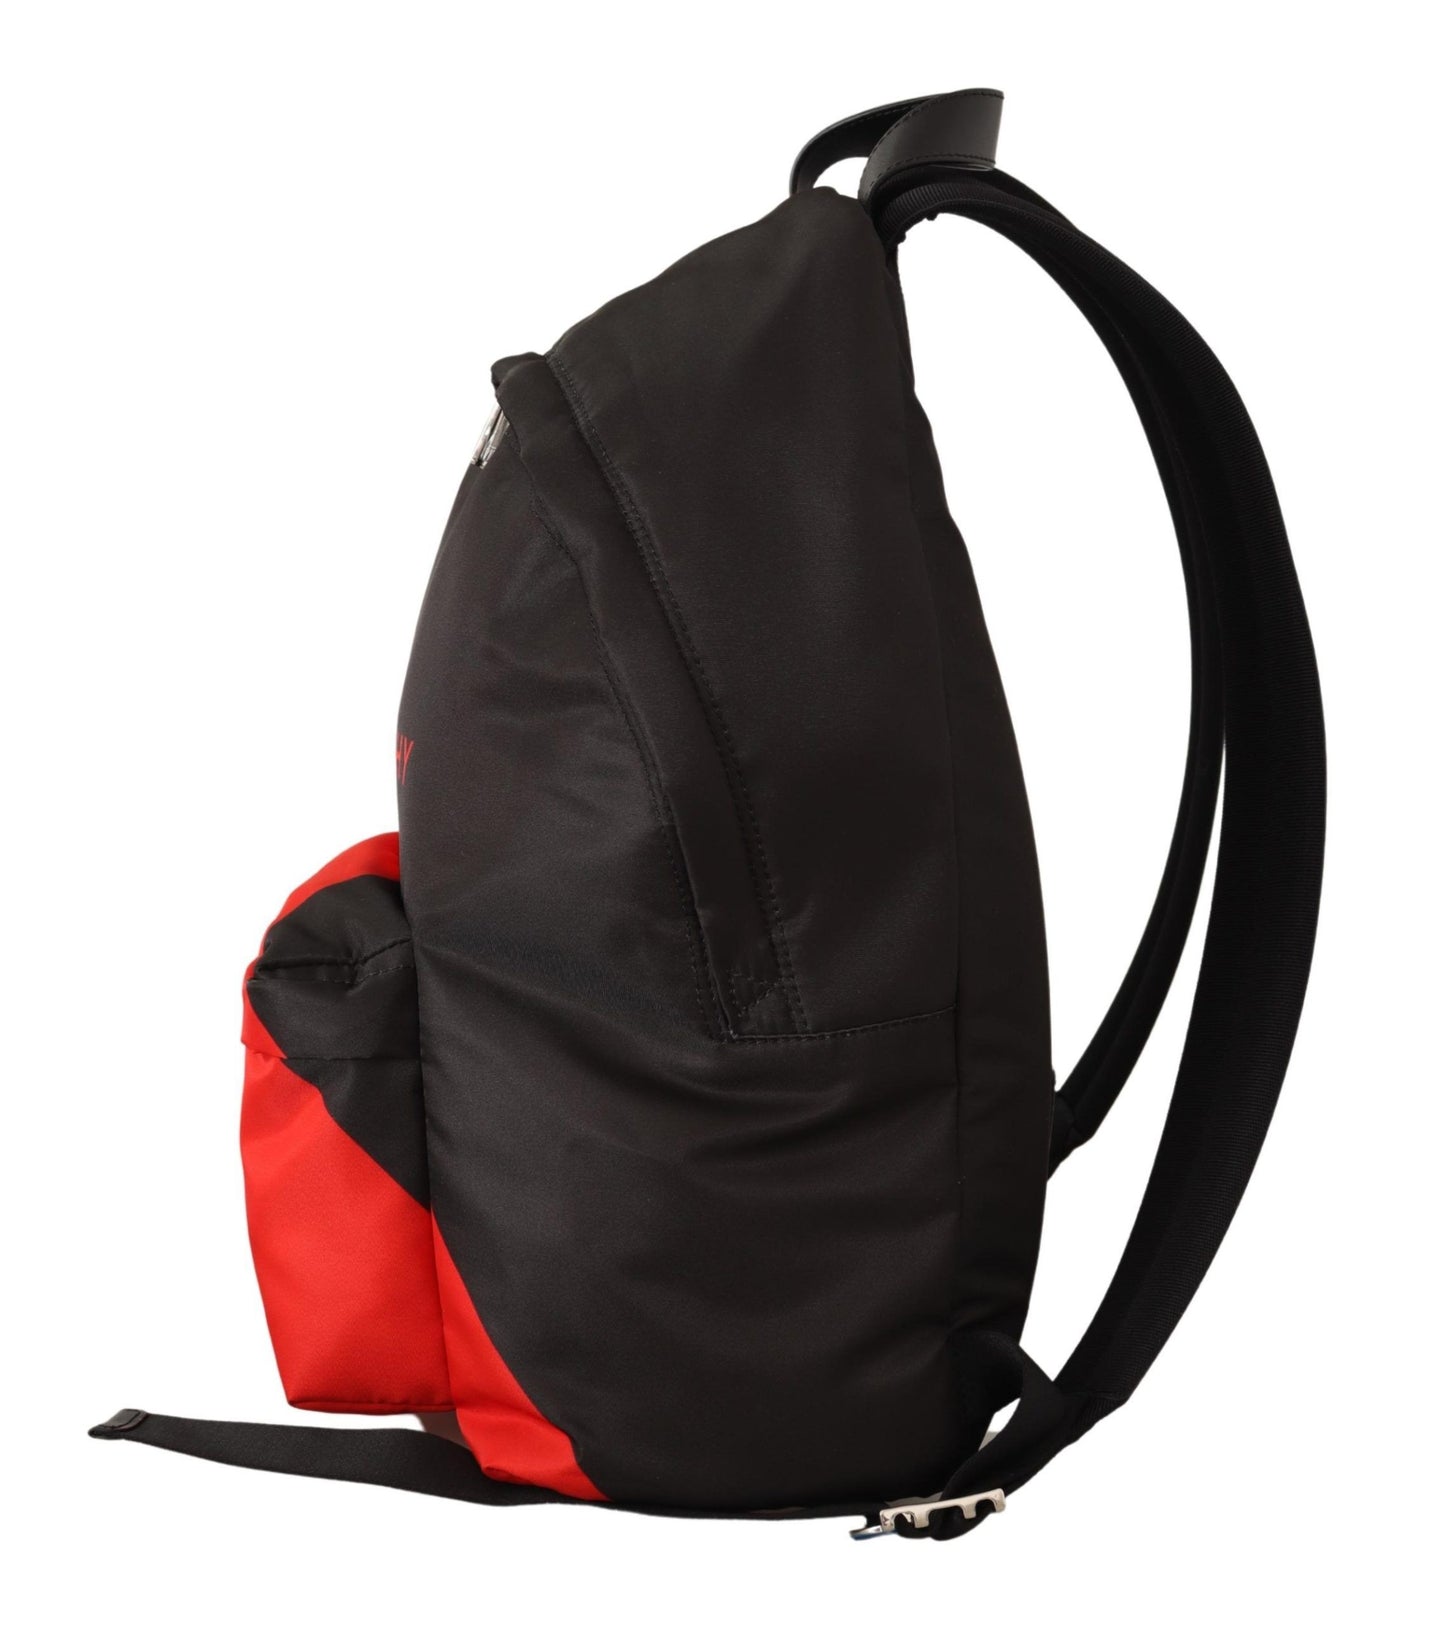 Sleek Urban Backpack in Black and Red